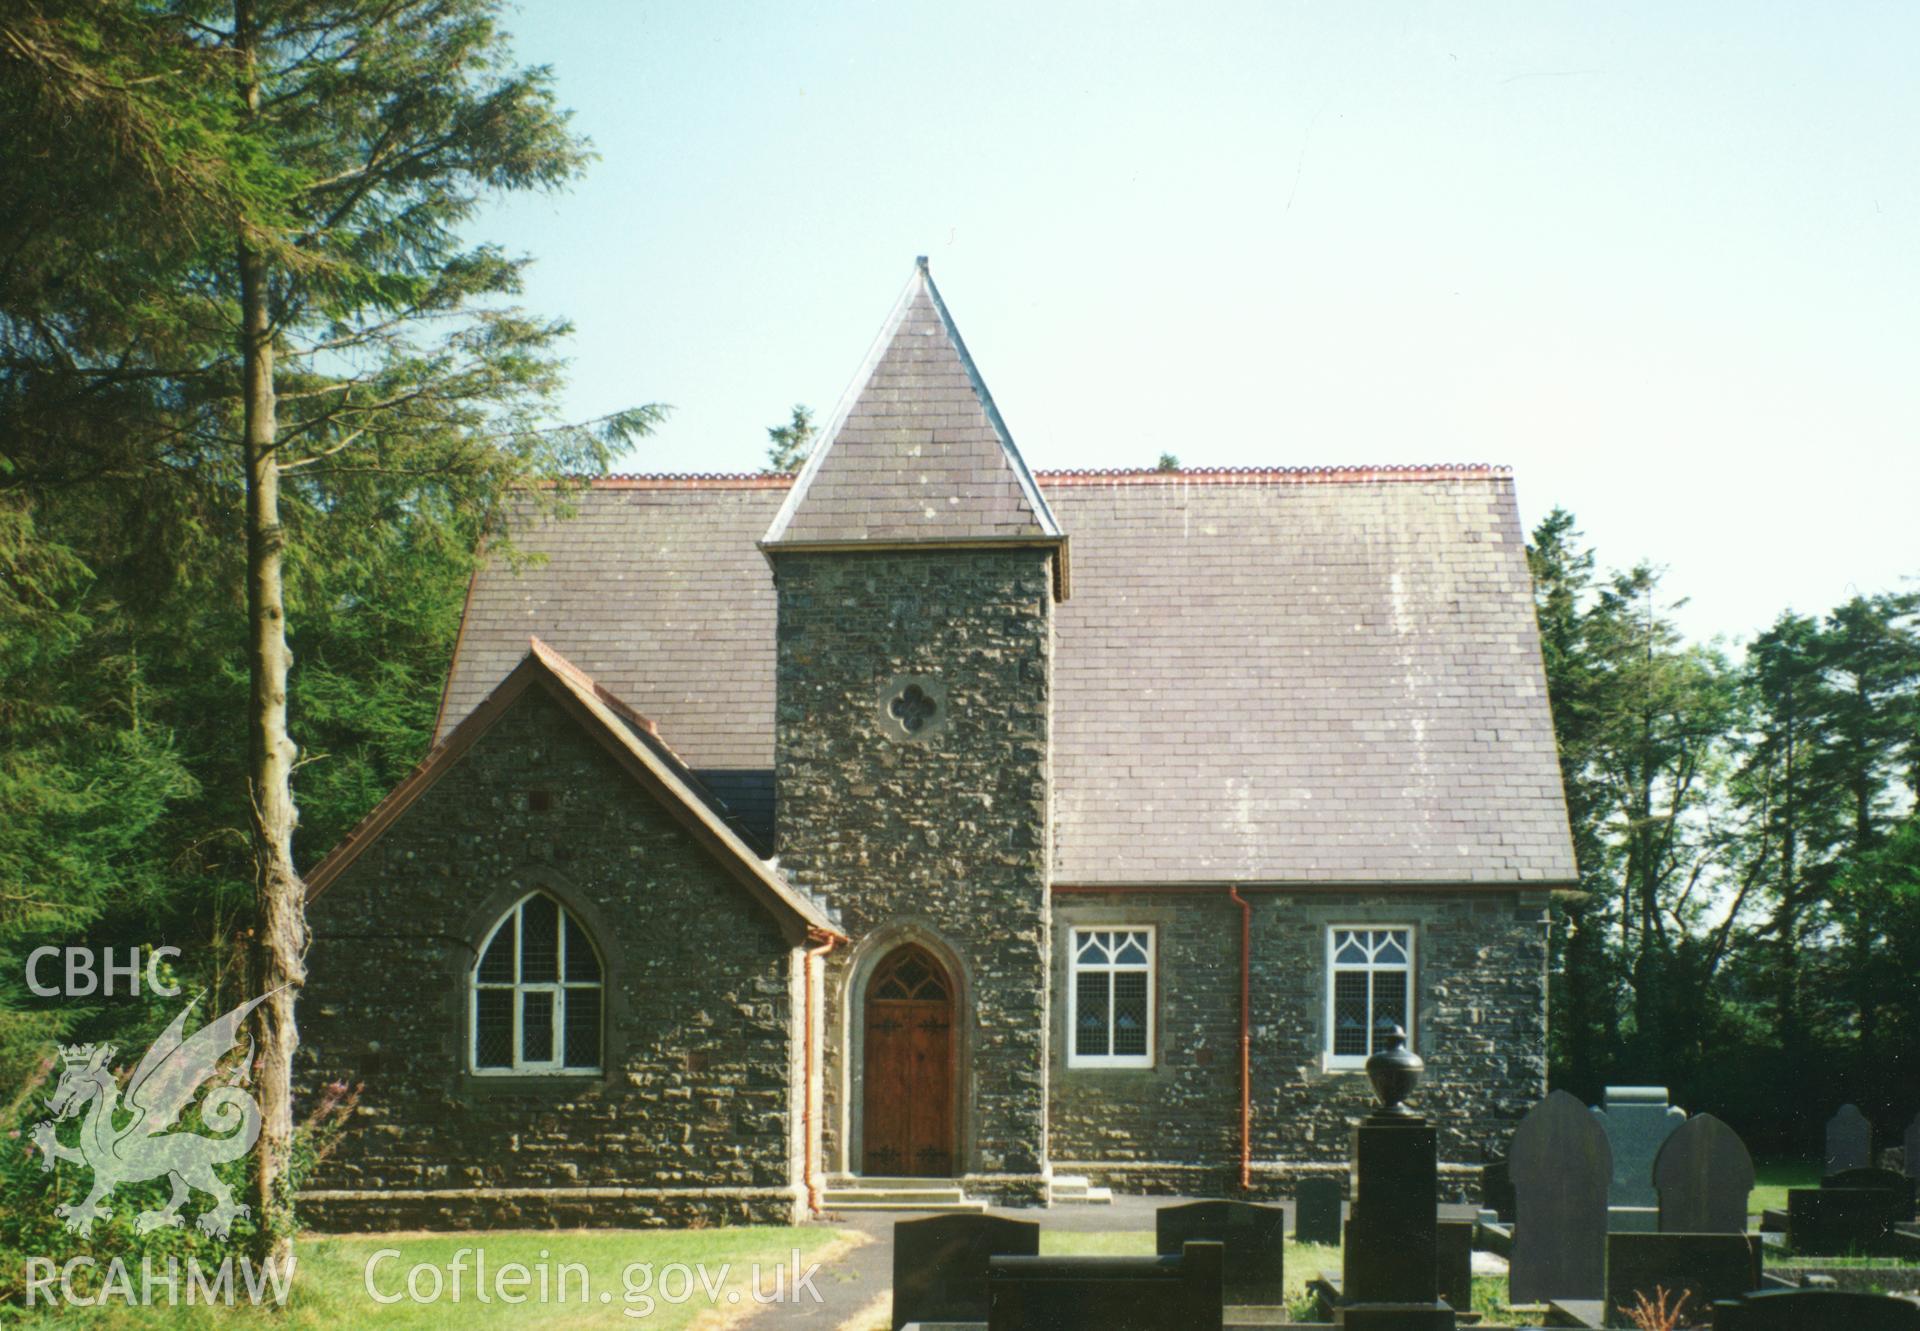 Digital copy of a colour photograph showing an exterior view of Bwlchyfadfa Unitarian Chapel, taken by Robert Scourfield, c.1996.